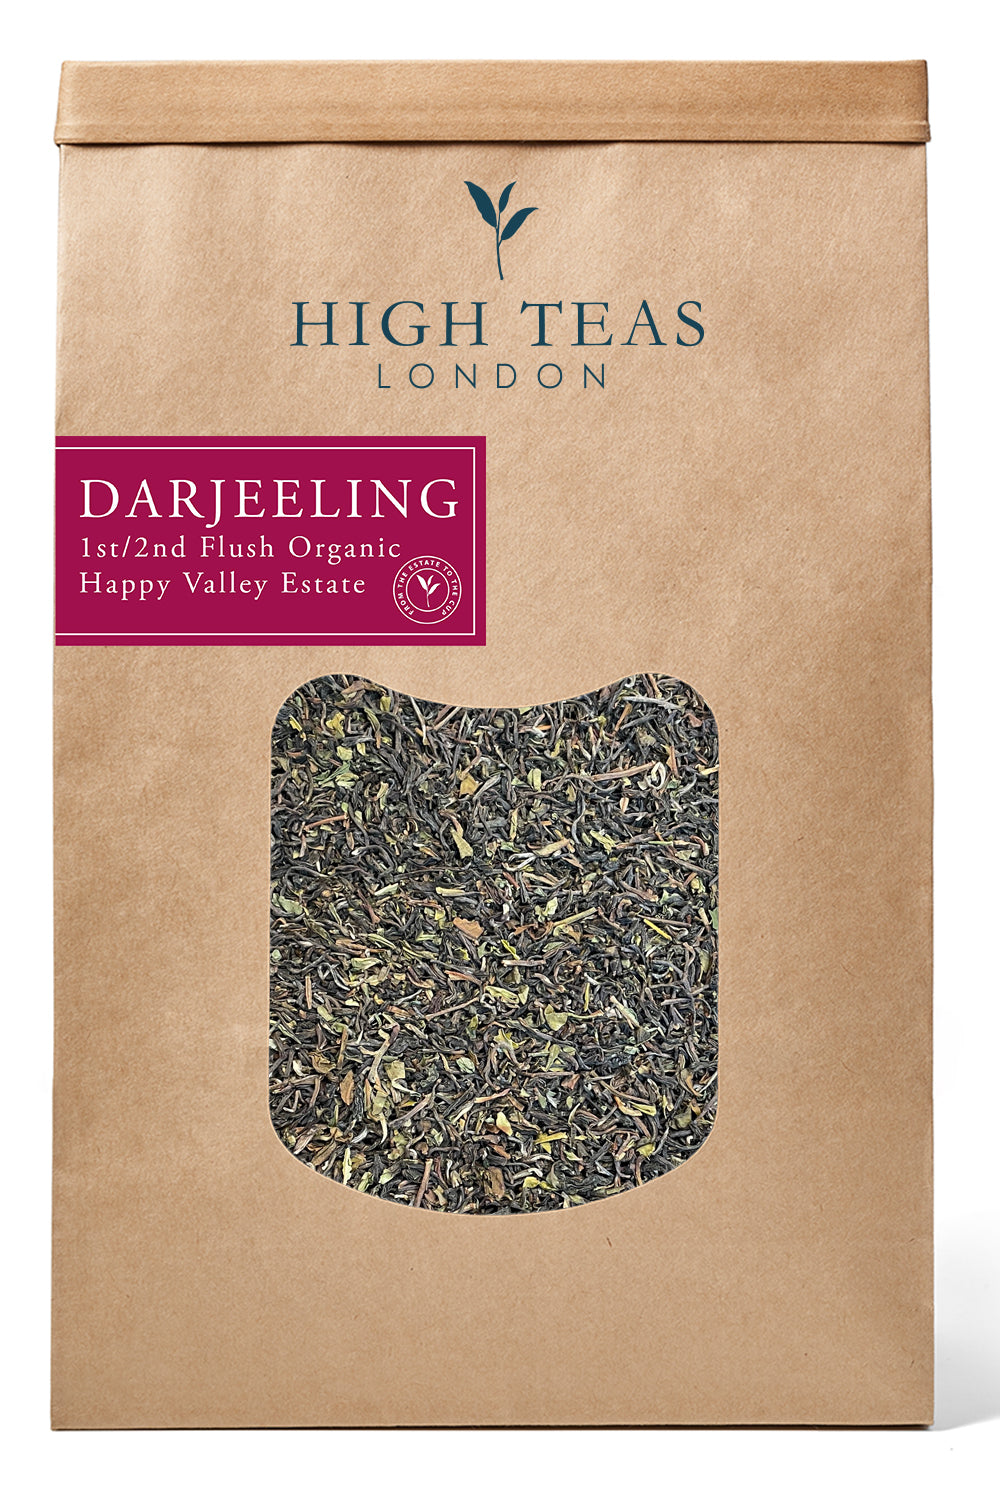 Darjeeling - 1st/2nd Flush Blend Organic FTGFOP1, Happy Valley Estate-500g-Loose Leaf Tea-High Teas